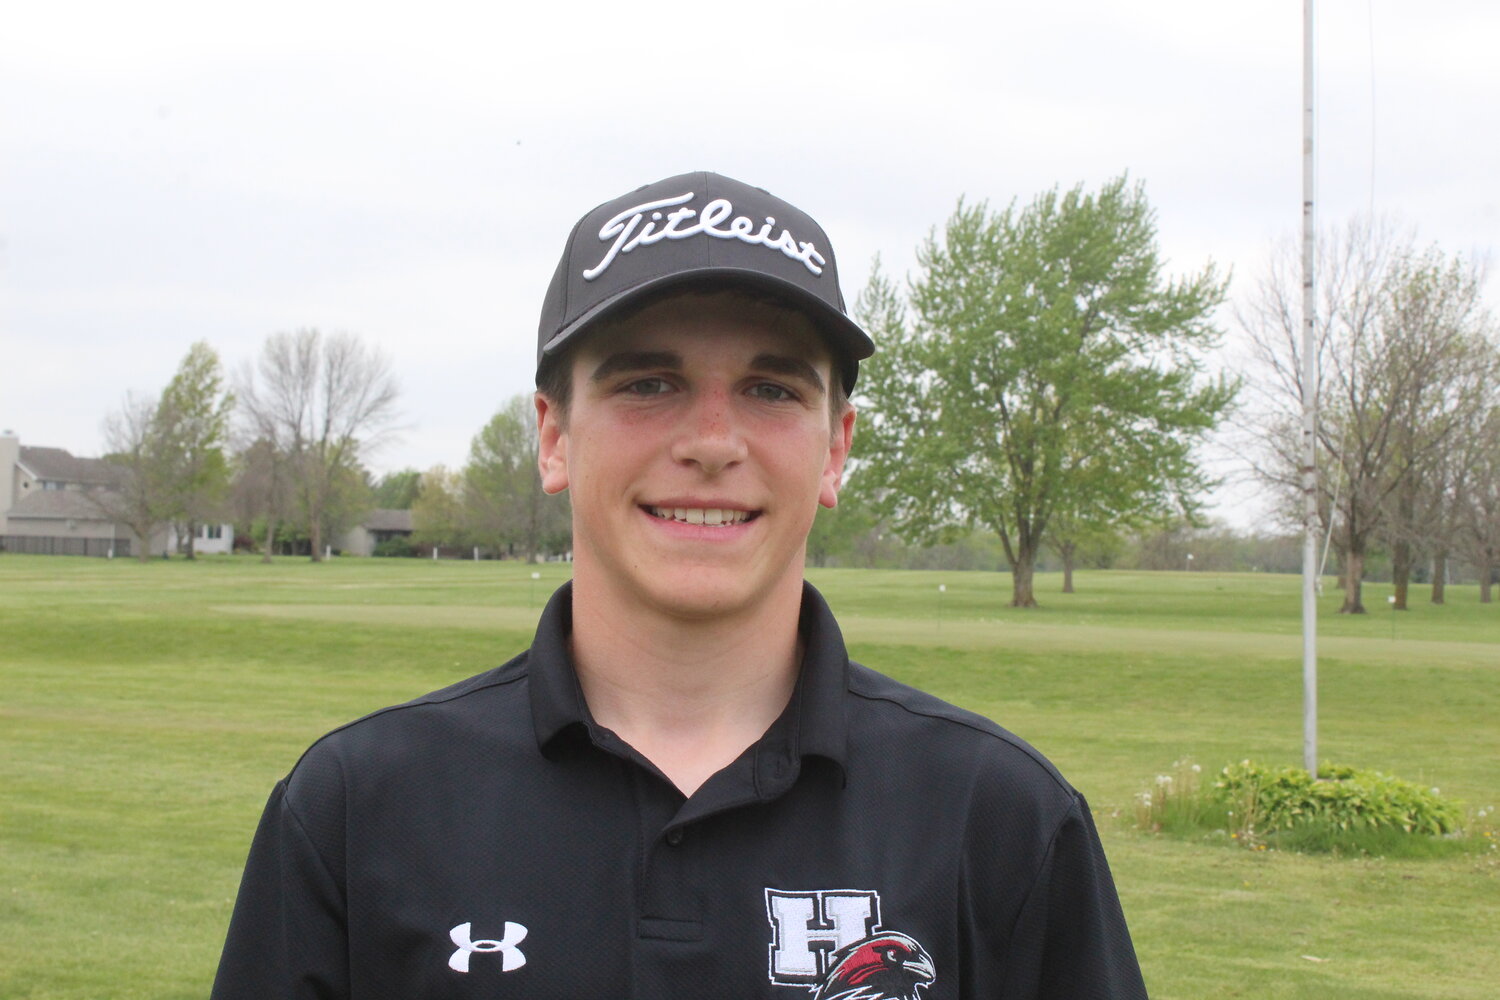 Hillcrest freshman golfer Rowan Miller, who won medalist honors twice in the last week, is the grandson of Hillcrest/Iowa Mennonite School golf team founder Phil Ropp.